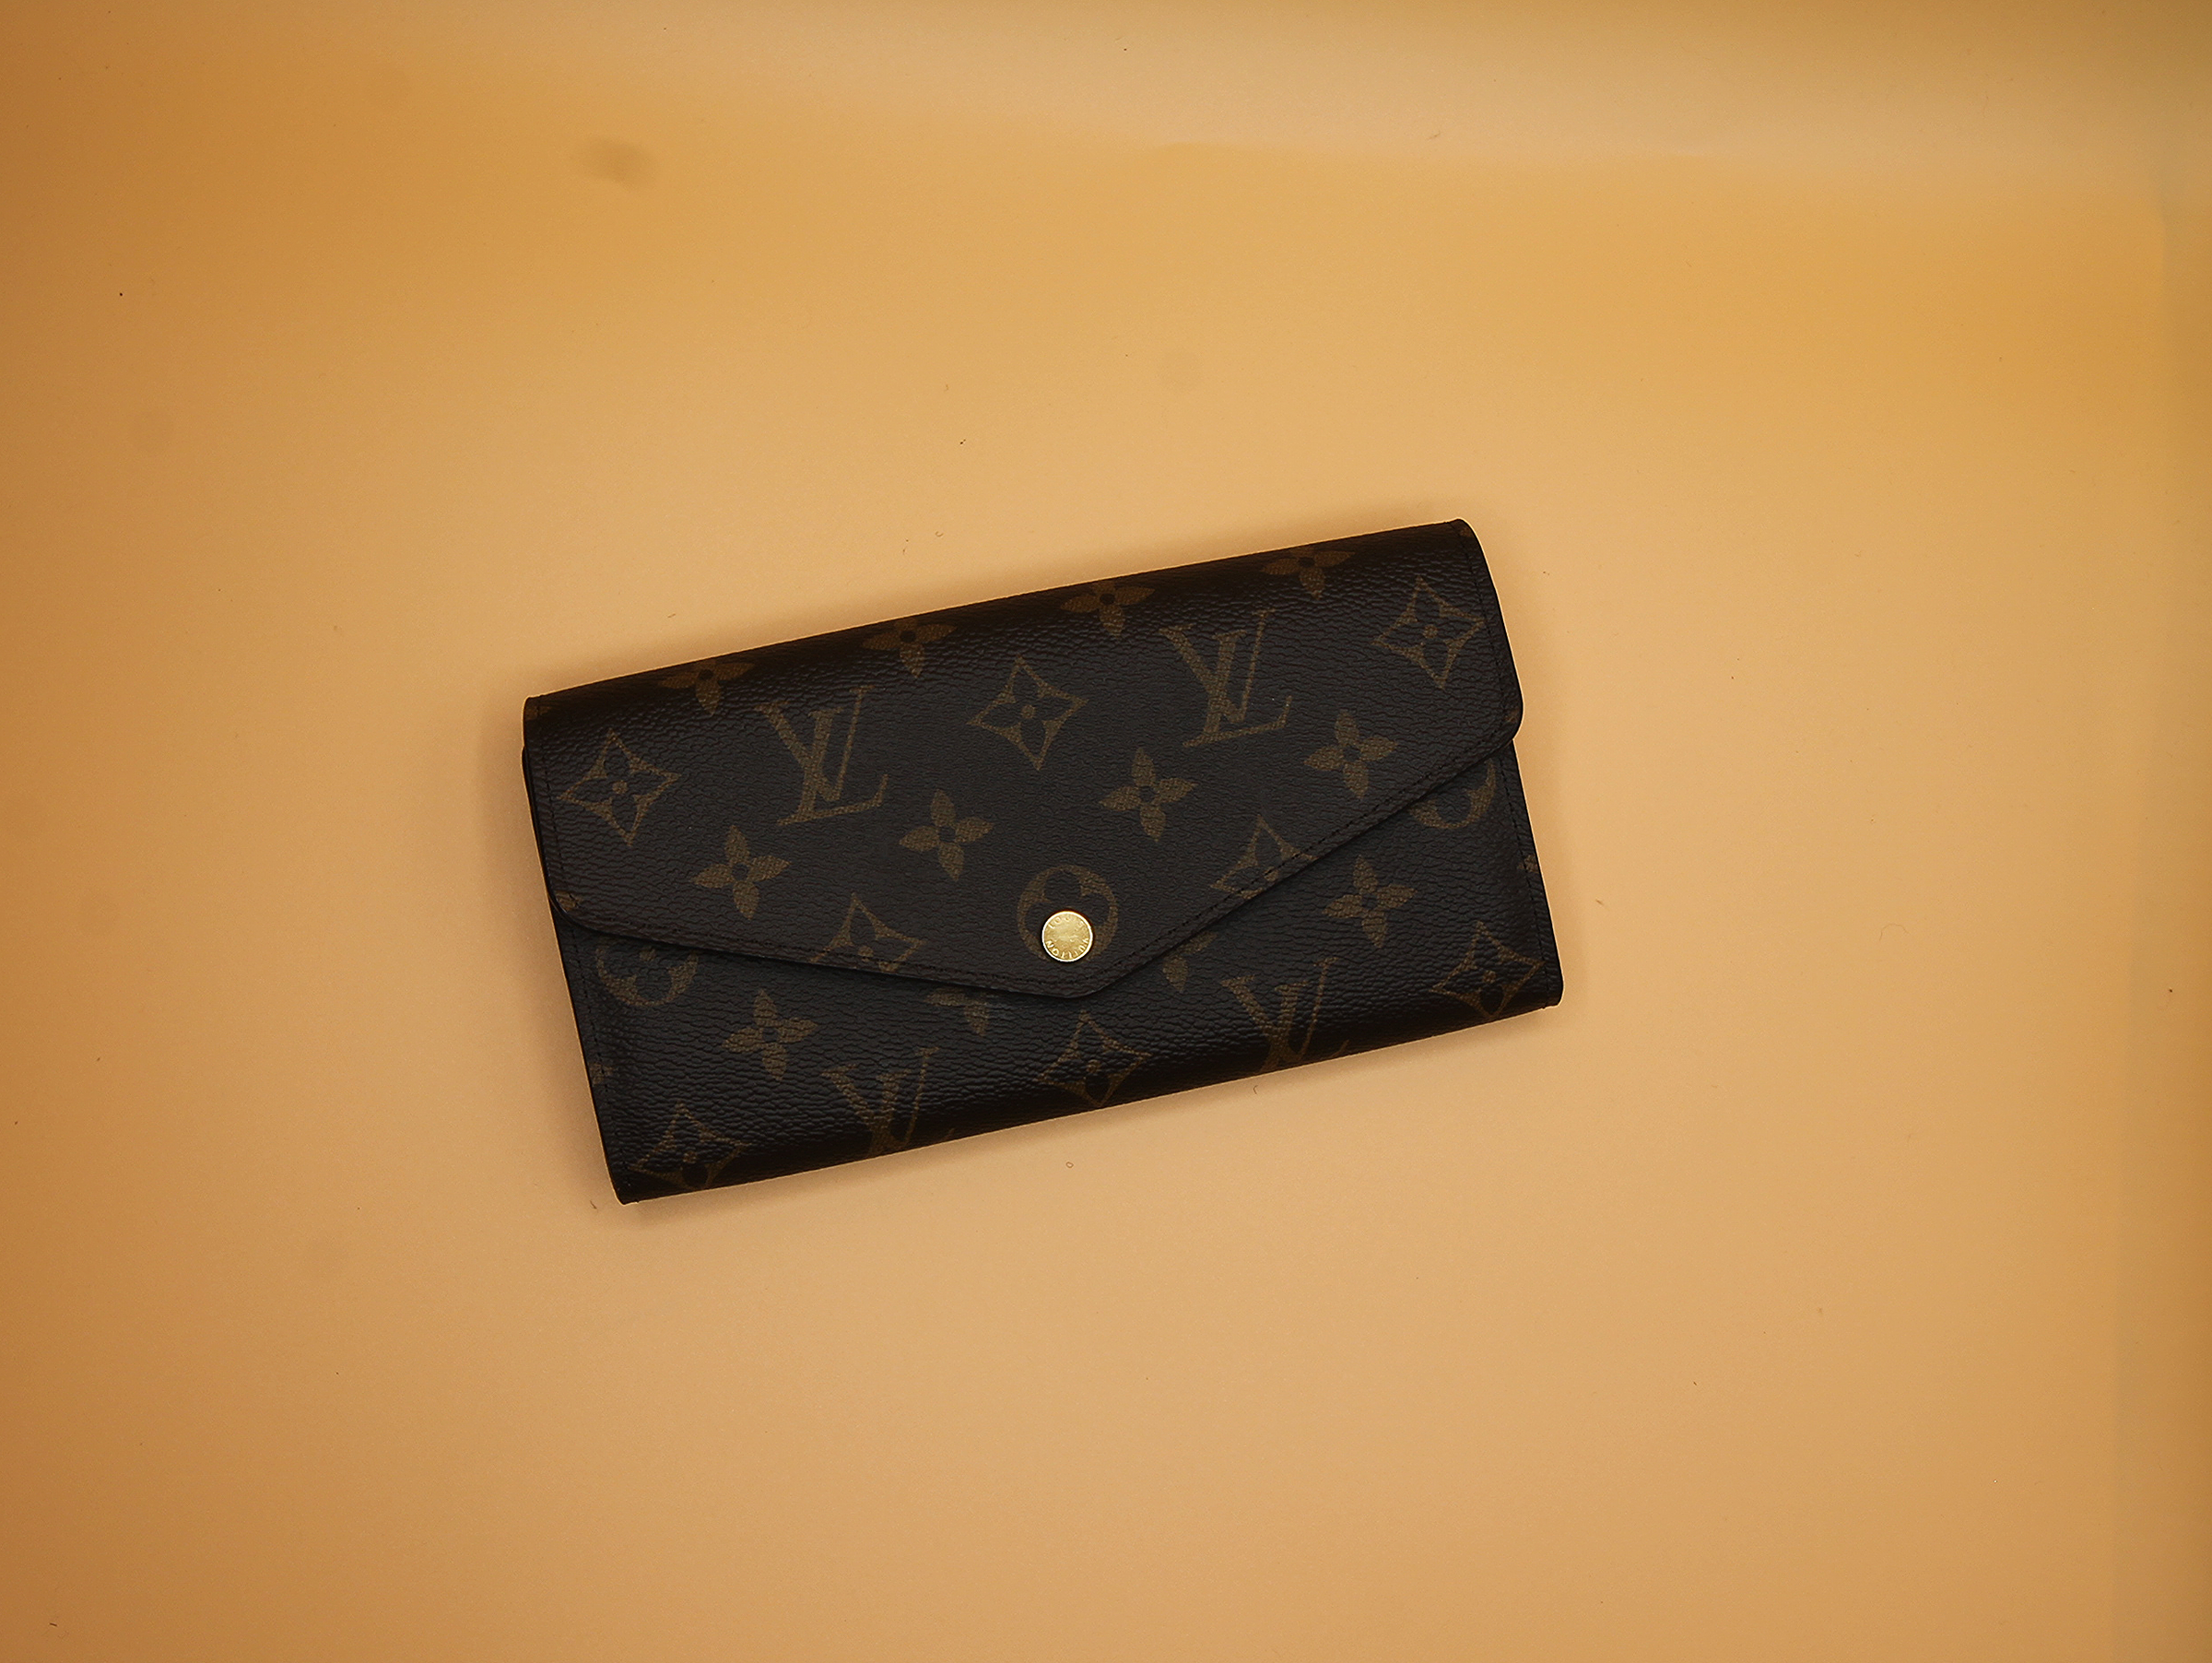 Louis Vuitton Medium Sarah Purse Wallet in Monogram - SOLD